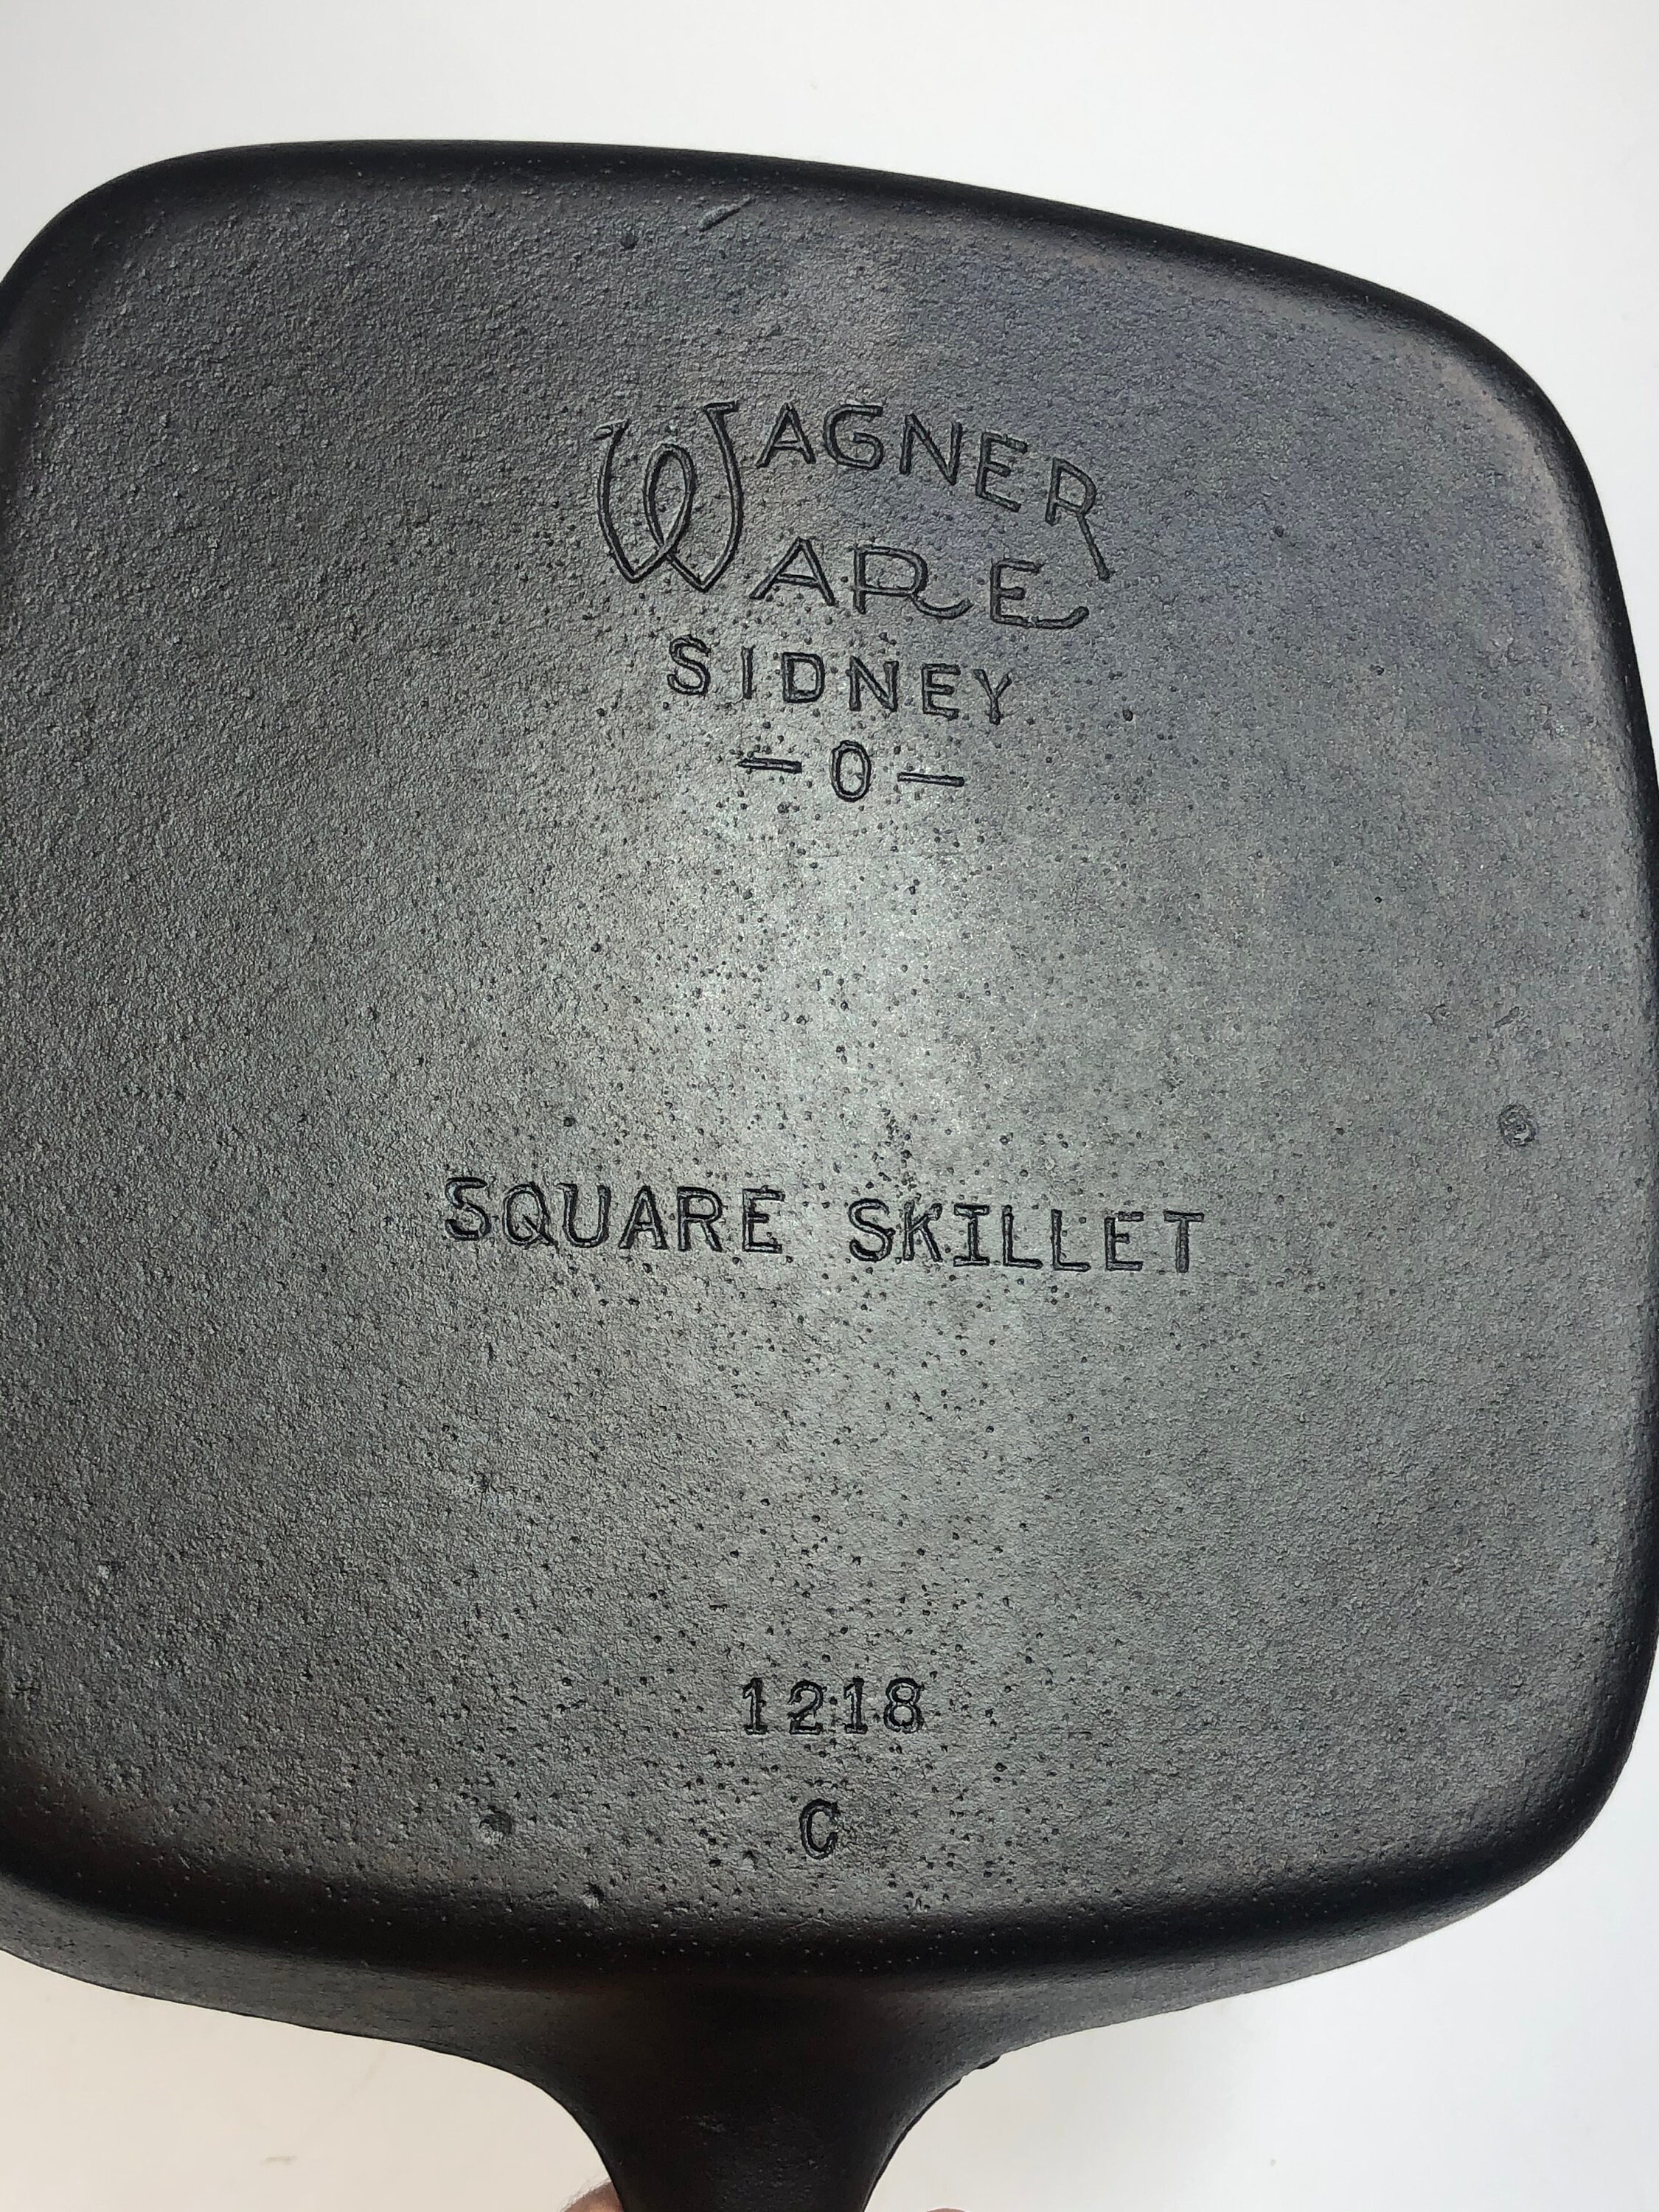 Wagner Ware Sidney O Square Skillet 1218B 